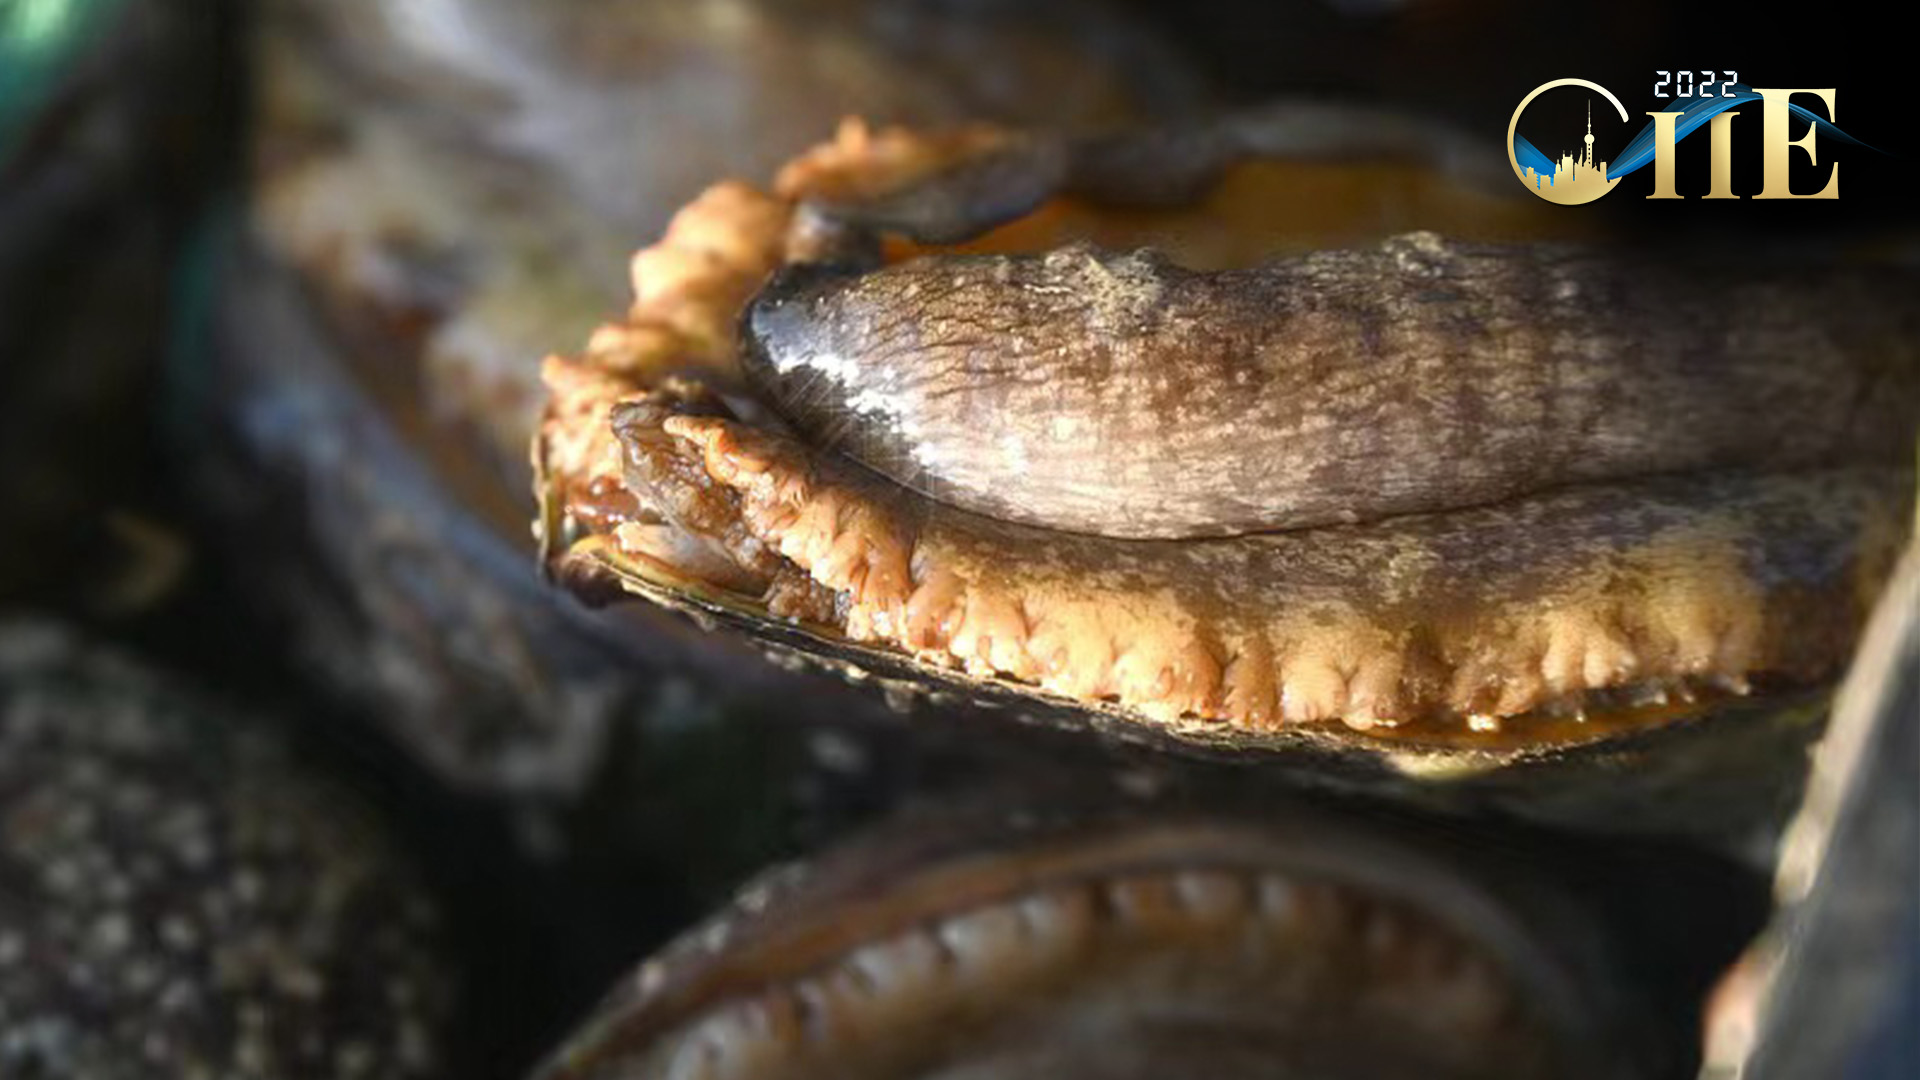 Live: Explore an abalone farm on South Africa's SW coast